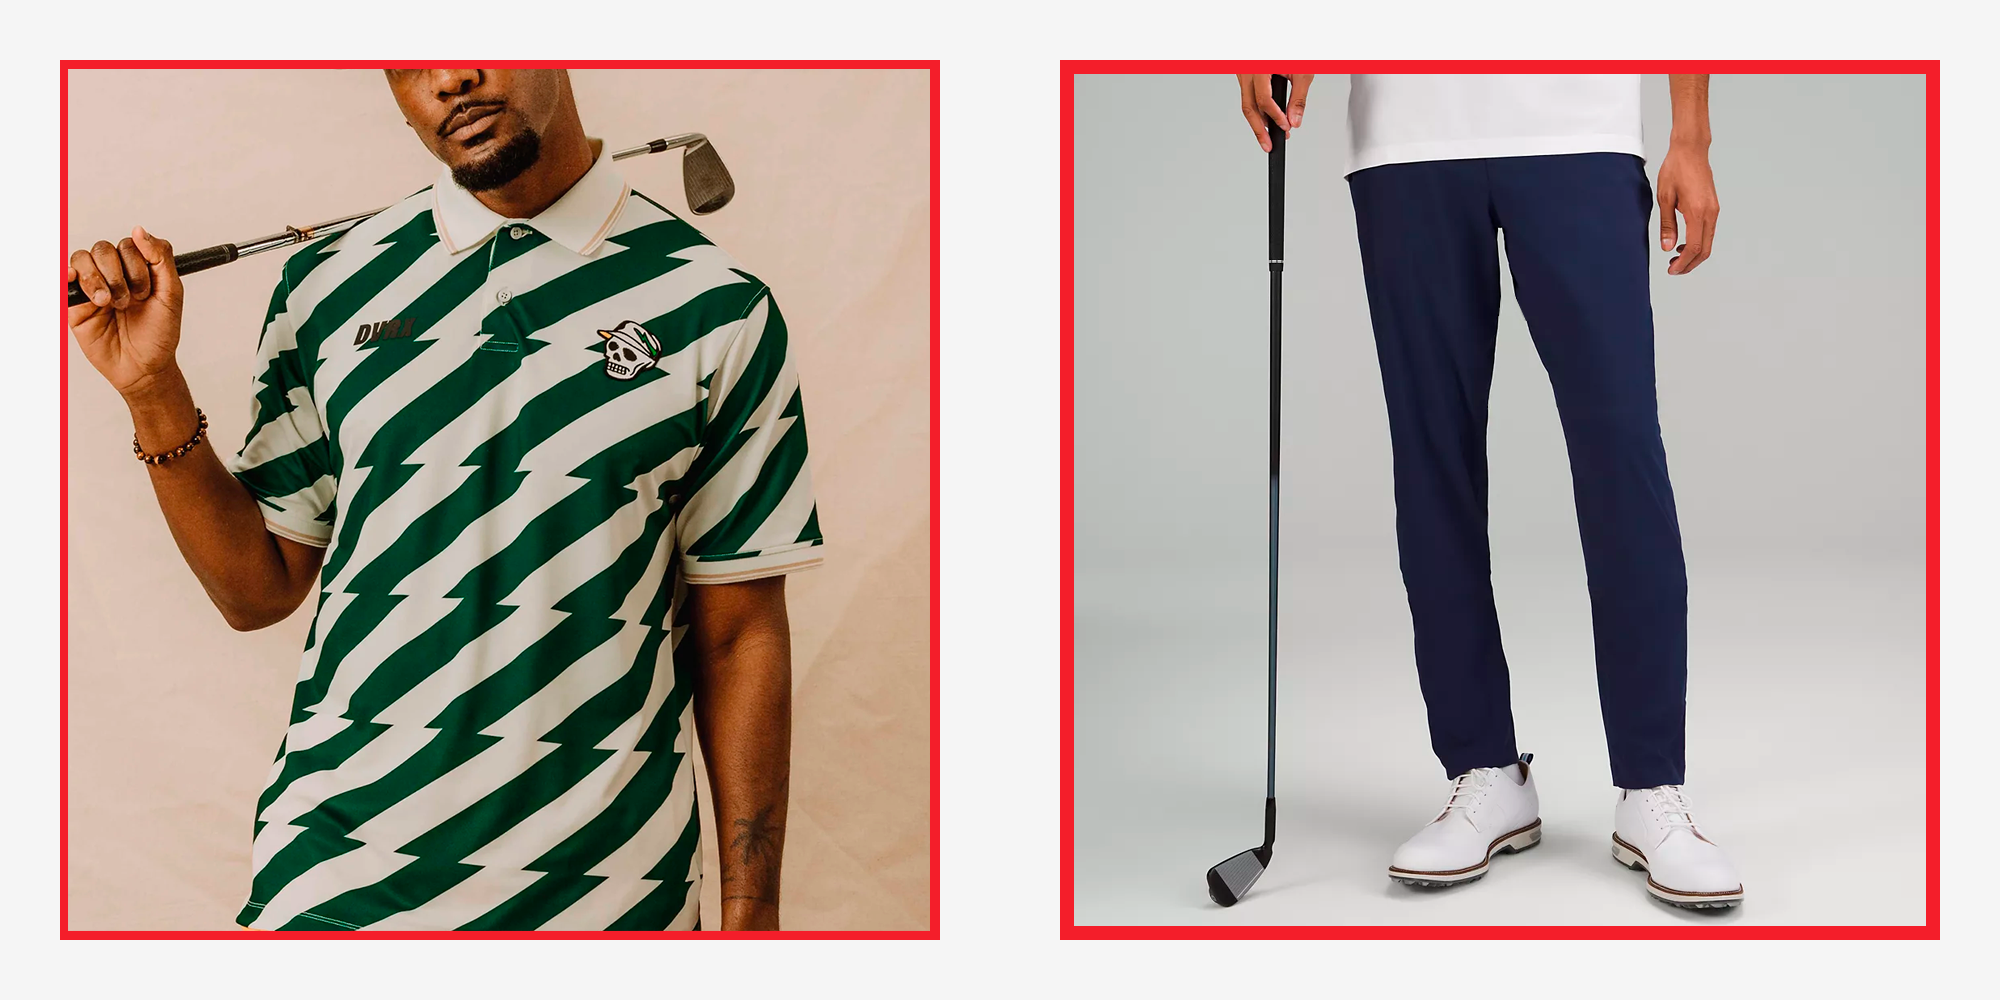 Official Dallas Mavericks Polos, Polo Shirts, Golf Shirts